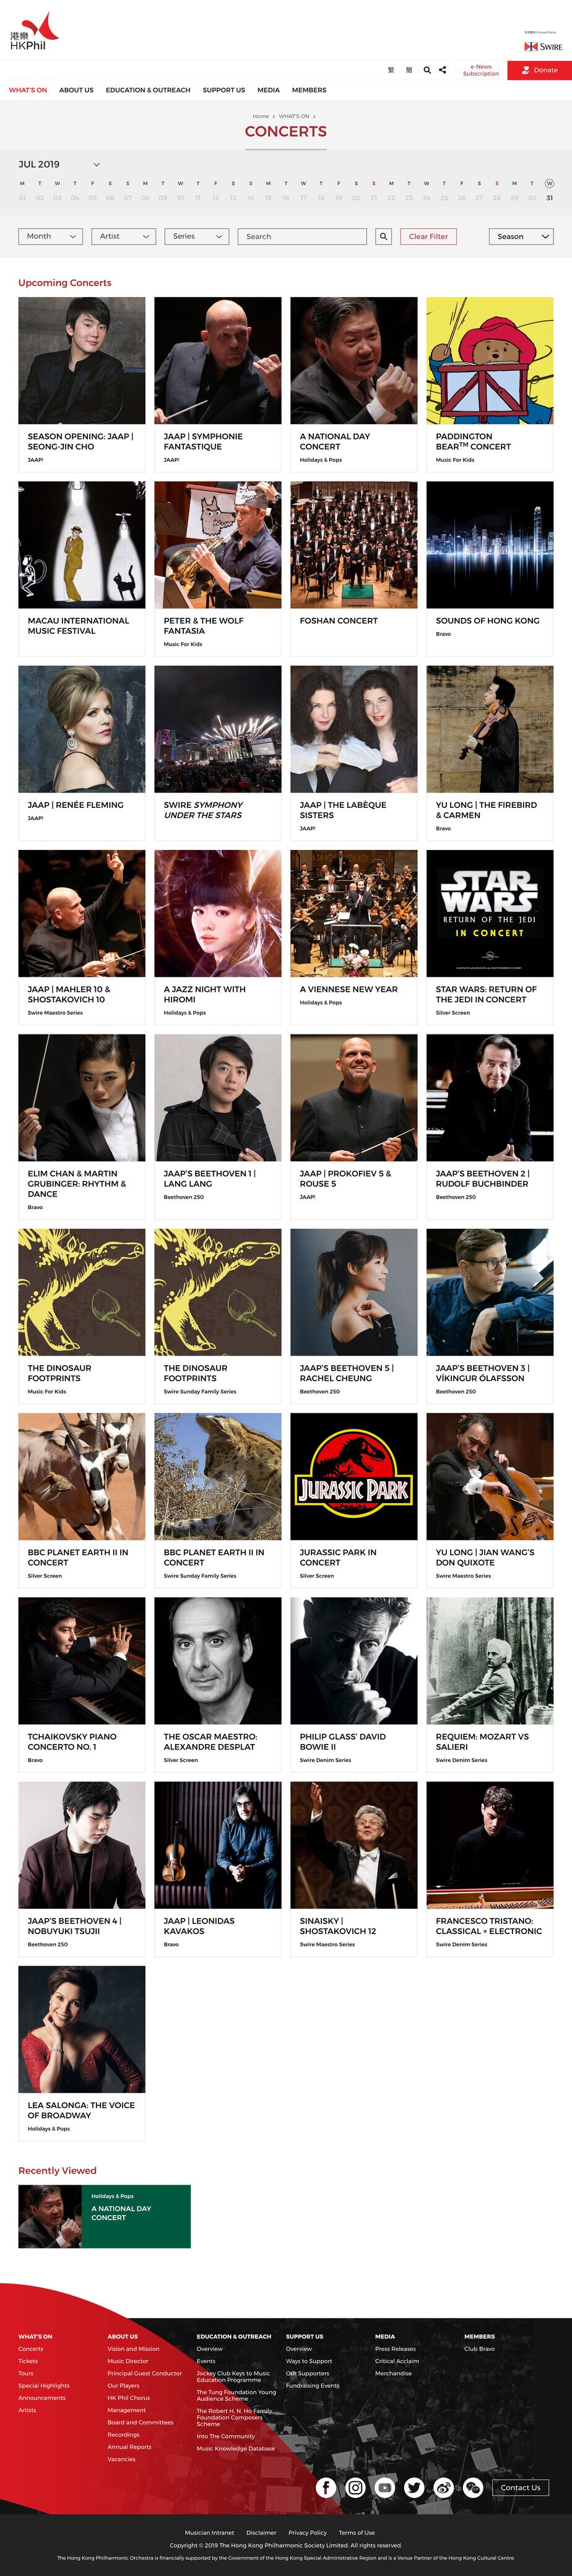 Hong Kong Philharmonic  website screenshot for desktop version 2 of 5